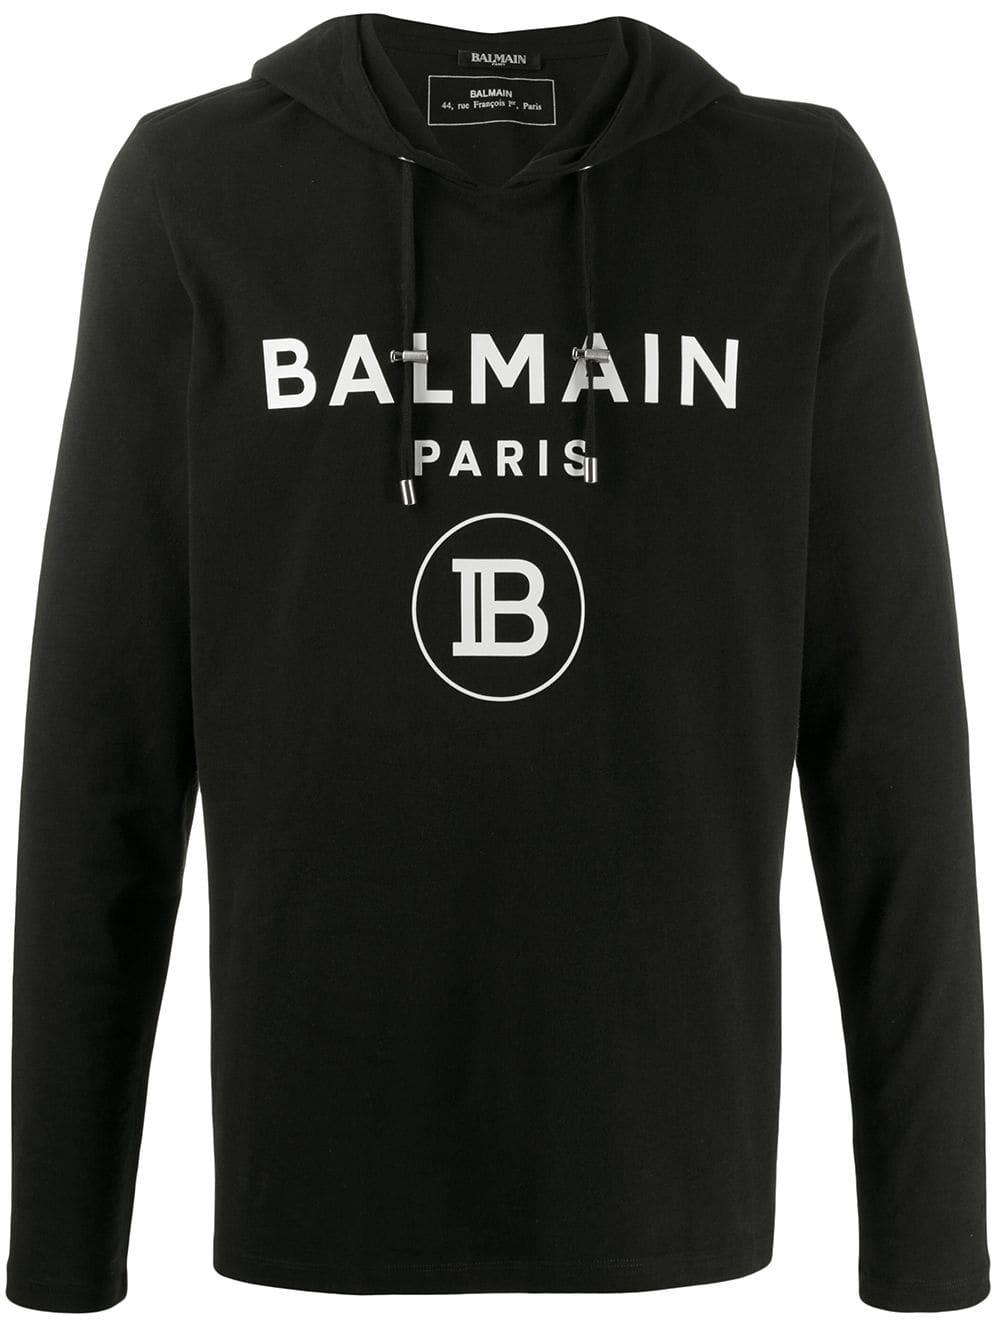 Balmain Cotton Hooded Long Sleeve T-shirt in Black for Men - Lyst